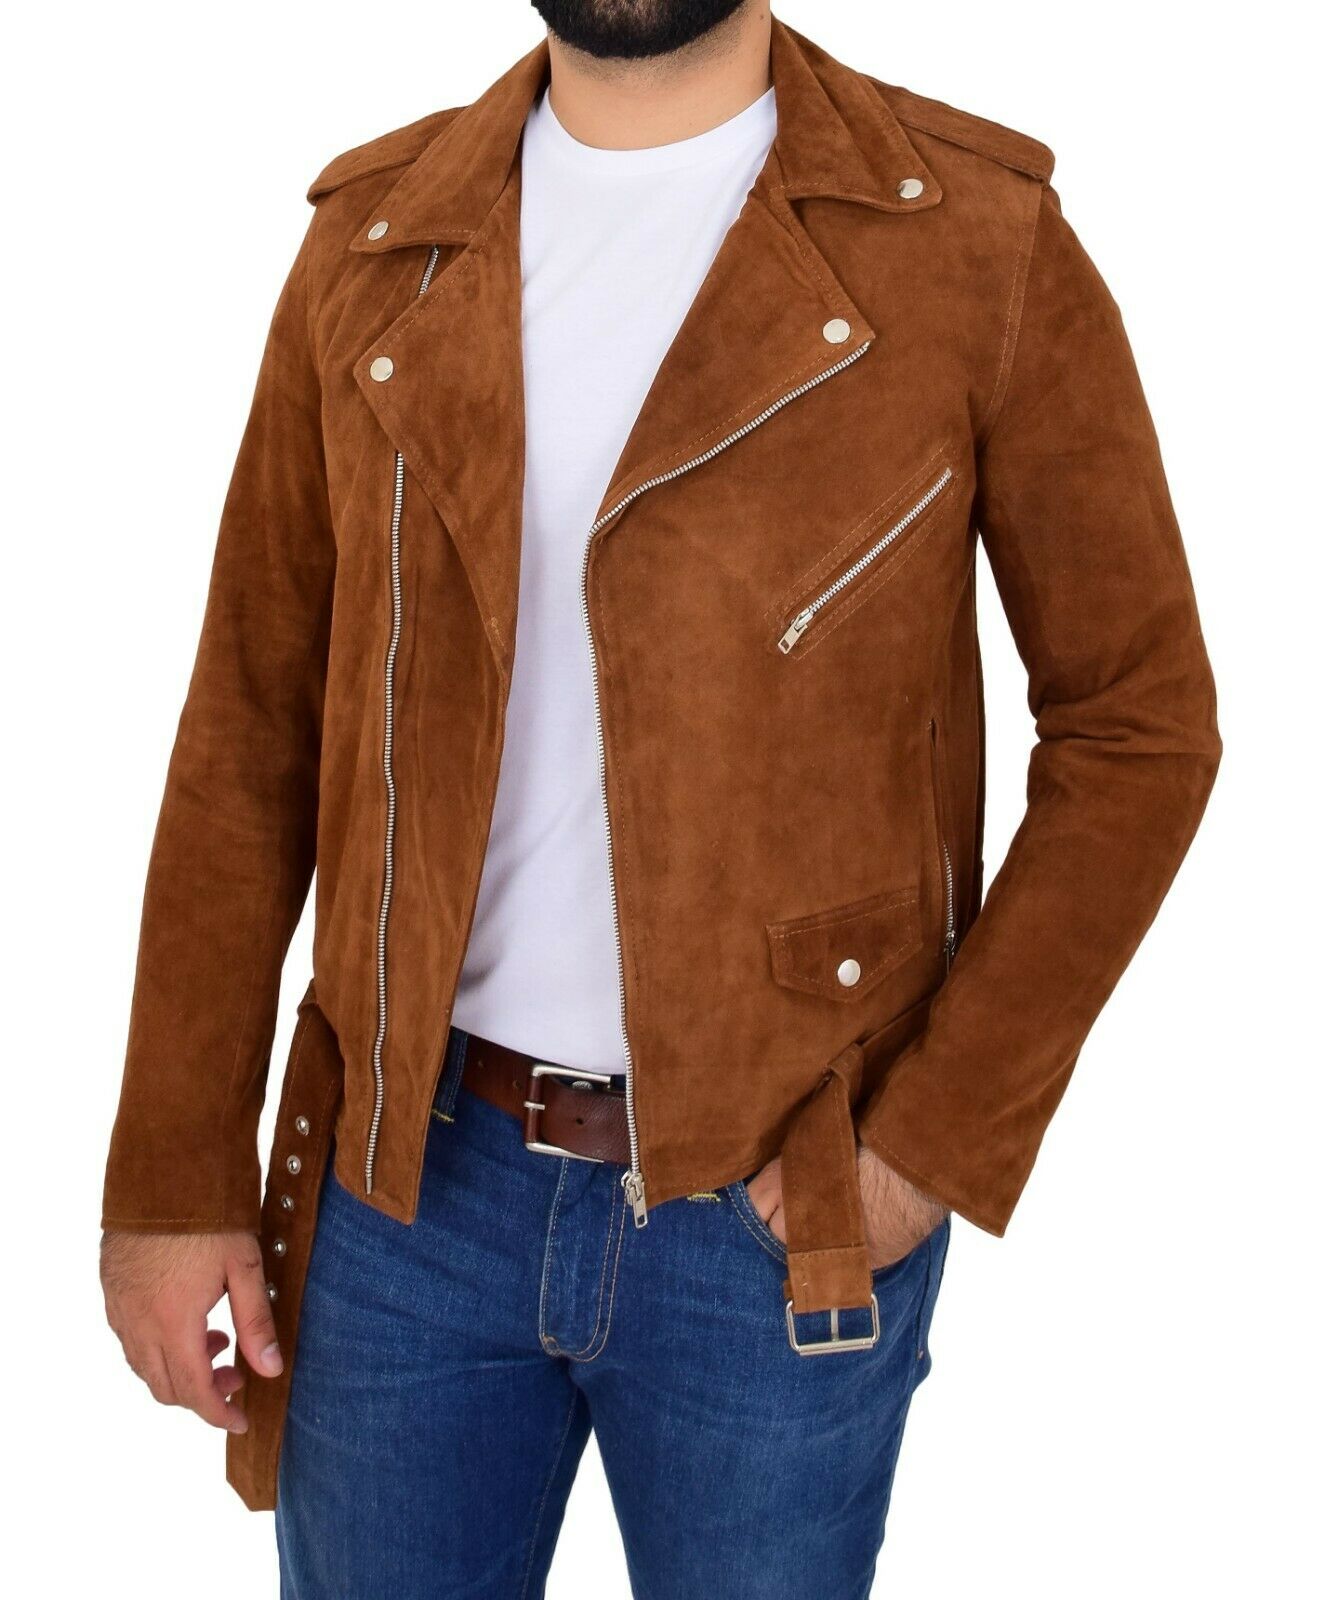 Men's Olive Green Real Suede Leather Jacket Western Trucker Moto Biker  Jacket | eBay